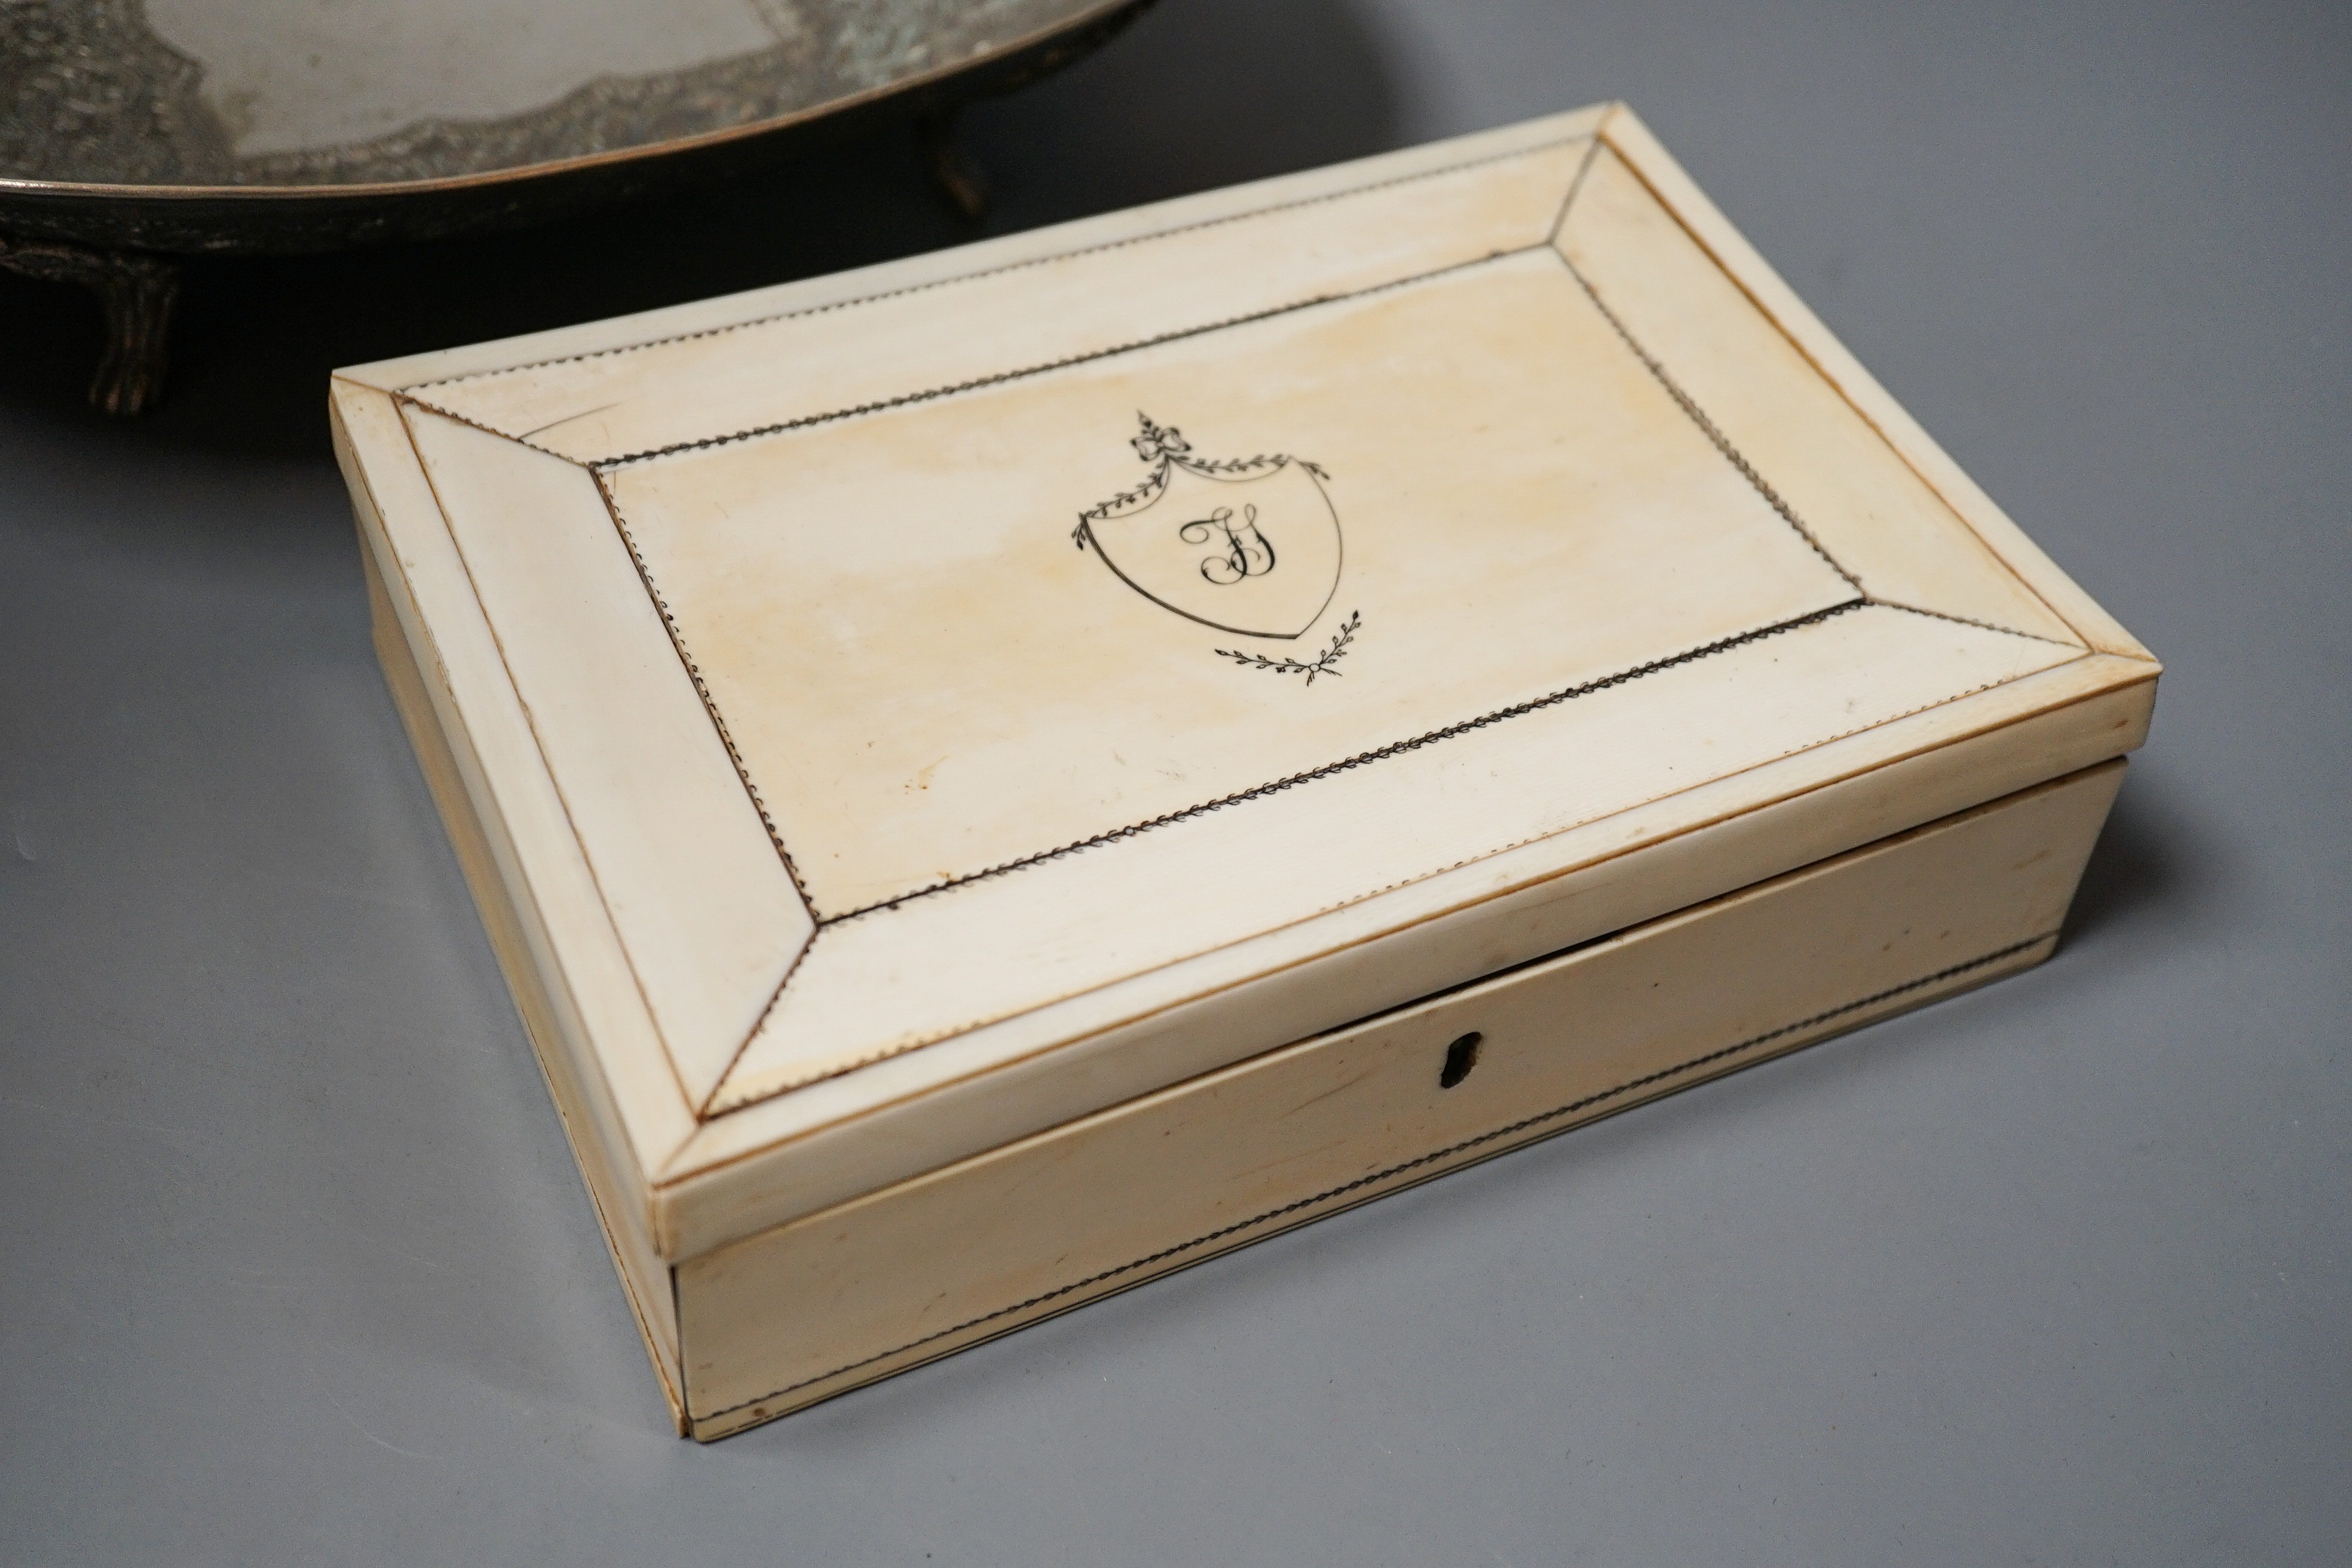 A Vizagapatam ivory veneered sandalwood box, 20.5cm and a metal dish